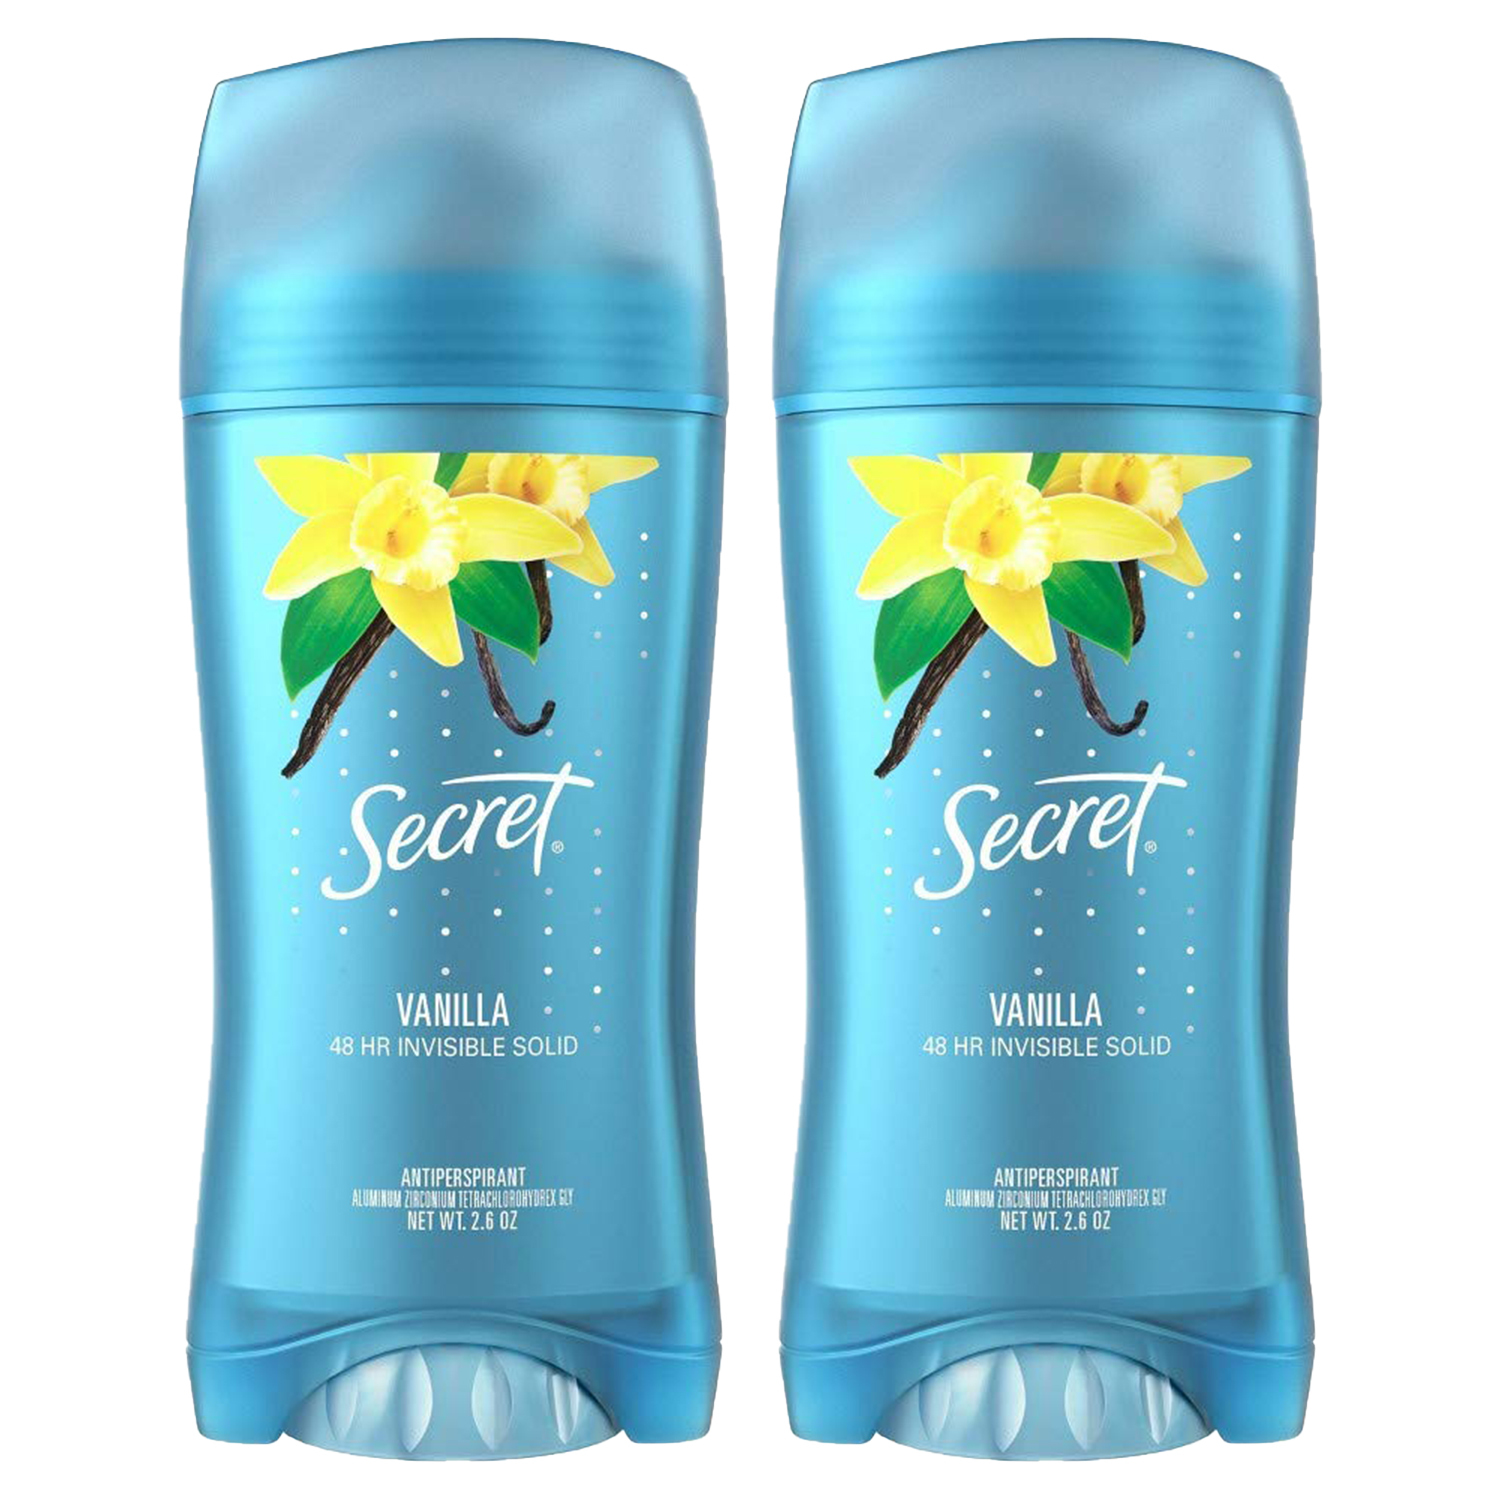 2-New Secret Scent Expressions Anti-Perspirant Deodorant Invisible Solid, Va Va